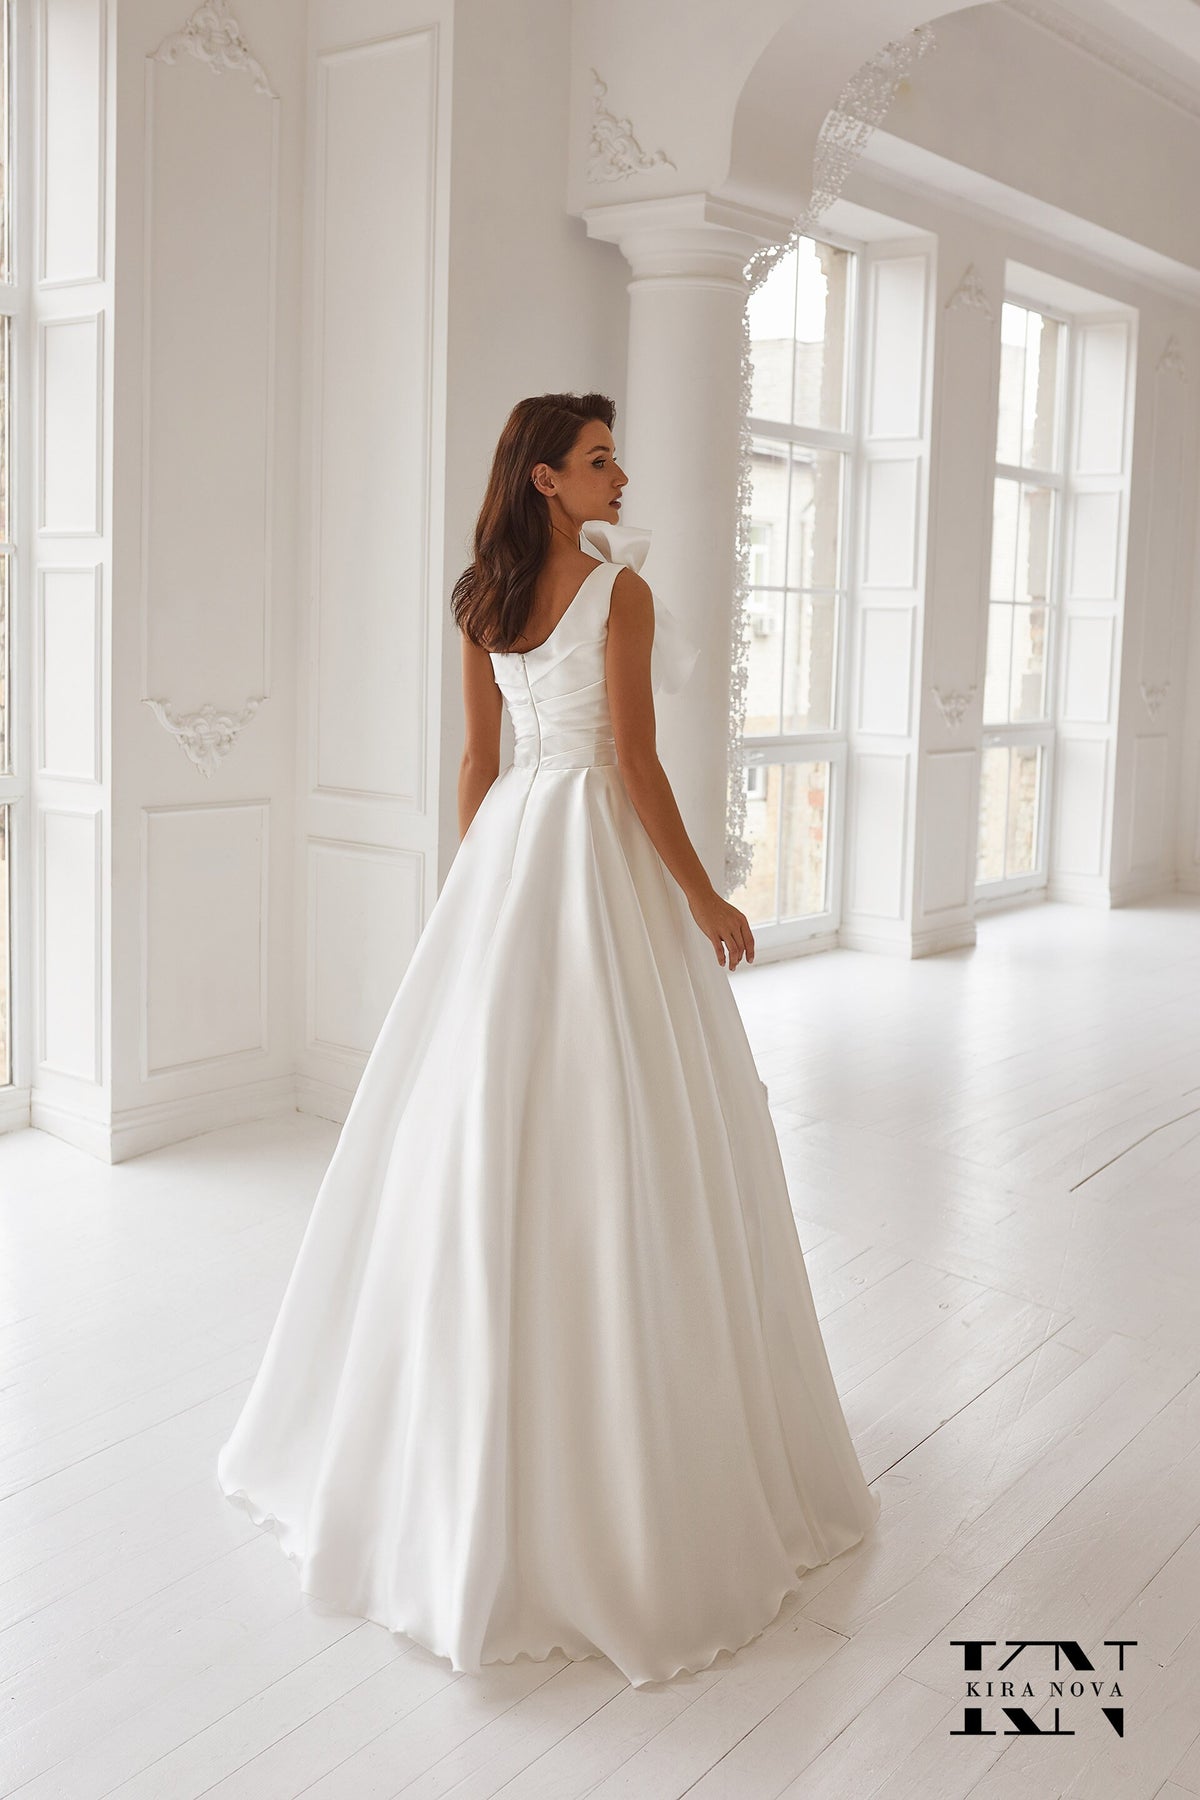 Classic Minimalist One Shoulder Wedding Dress Off White Bridal Gown Full Aline Sleeveless Floor Length Zipper Back Dress